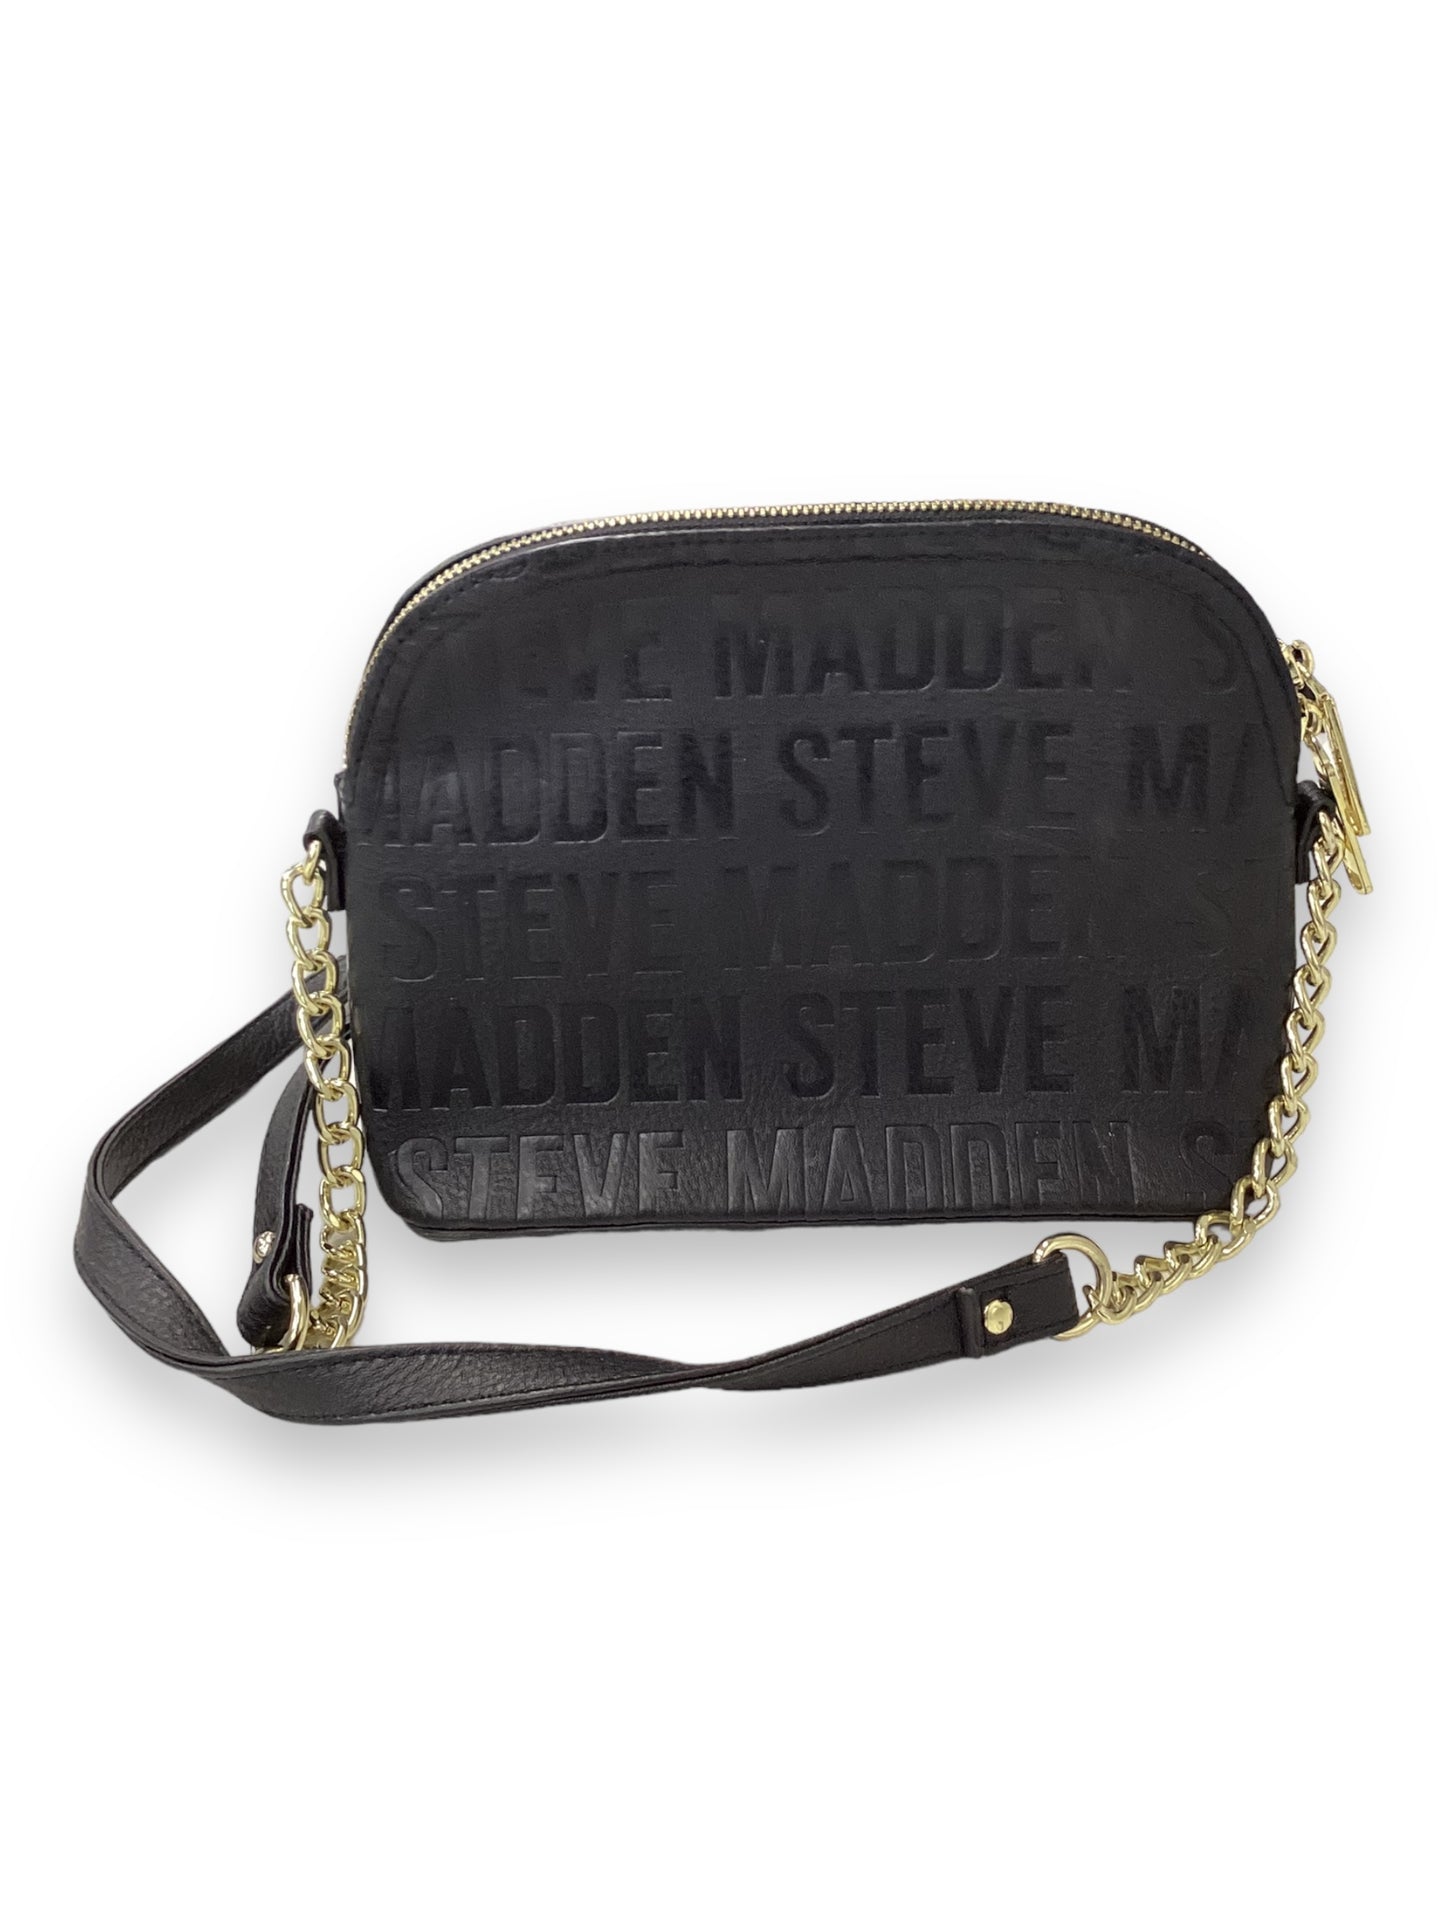 Handbag By Steve Madden  Size: Small